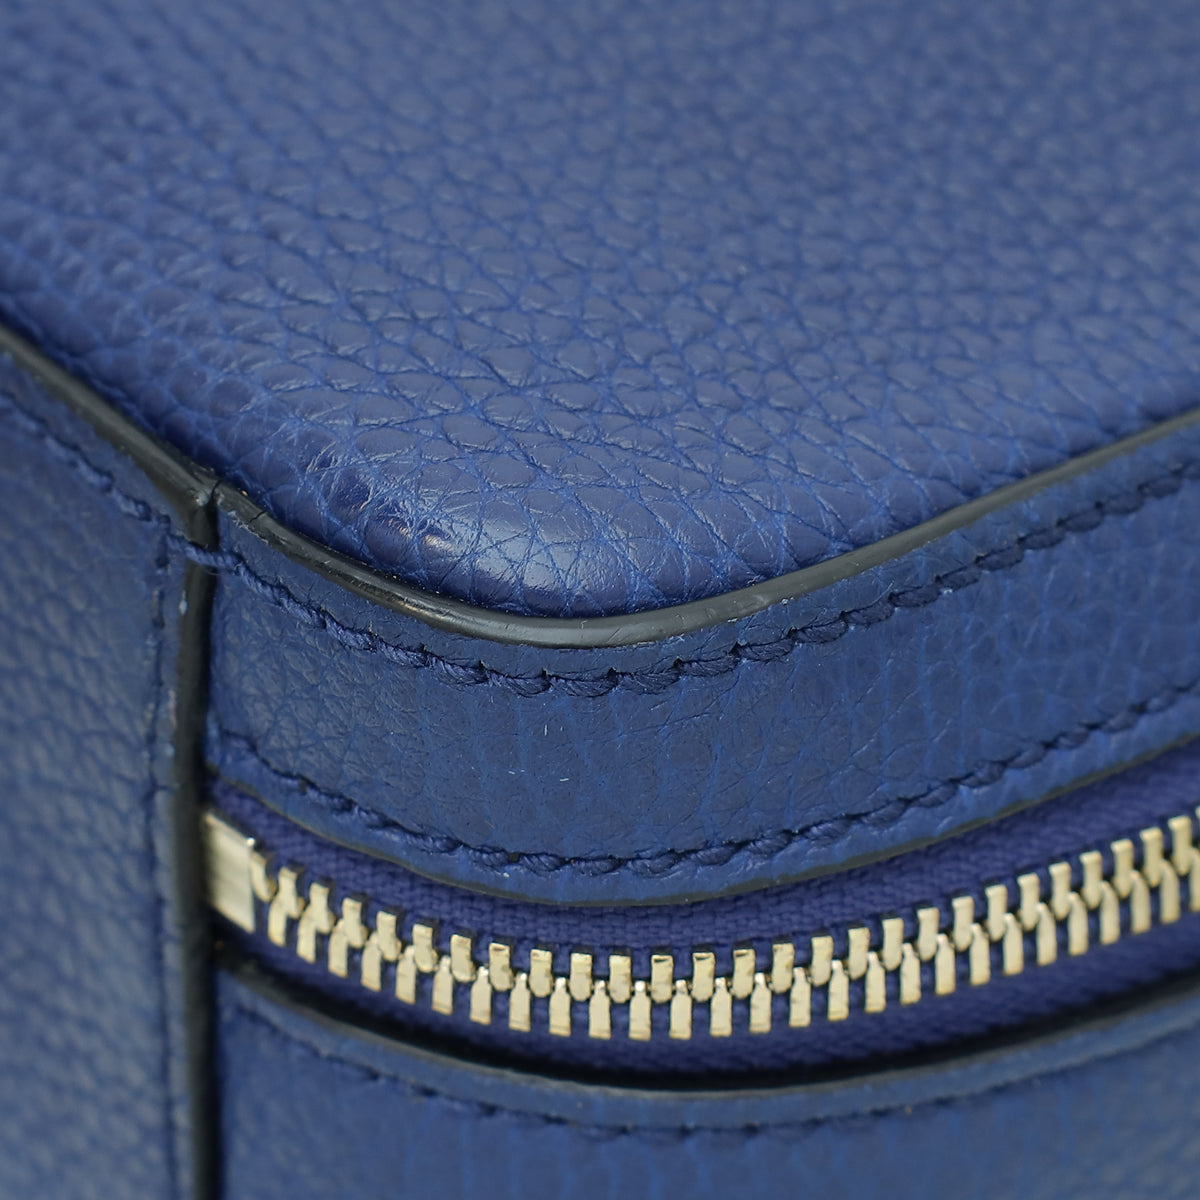 Dolce & Gabbana Royal Blue "Dolce Box" Bag